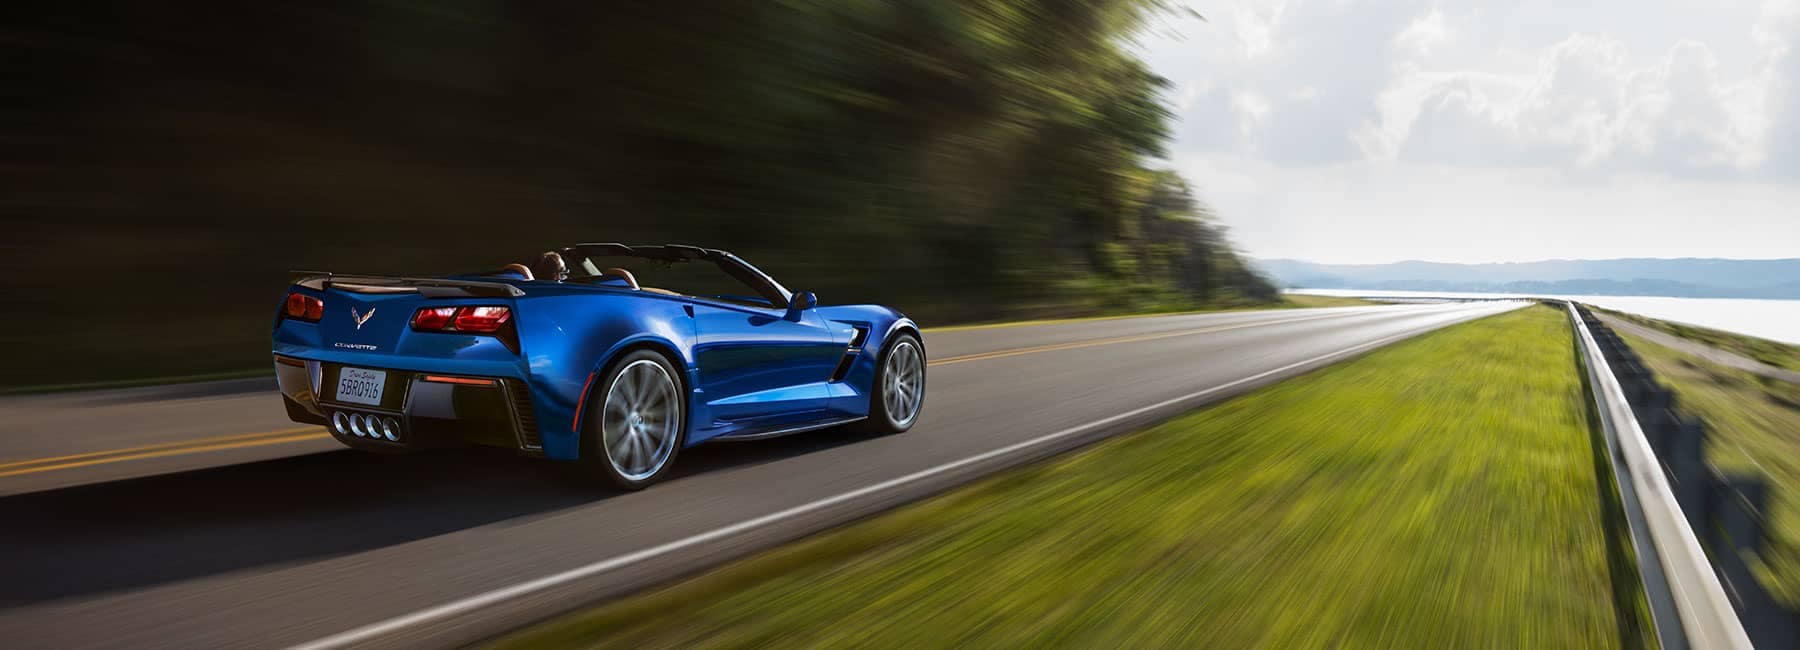 Blue Chevrolet Corvette driving on a road